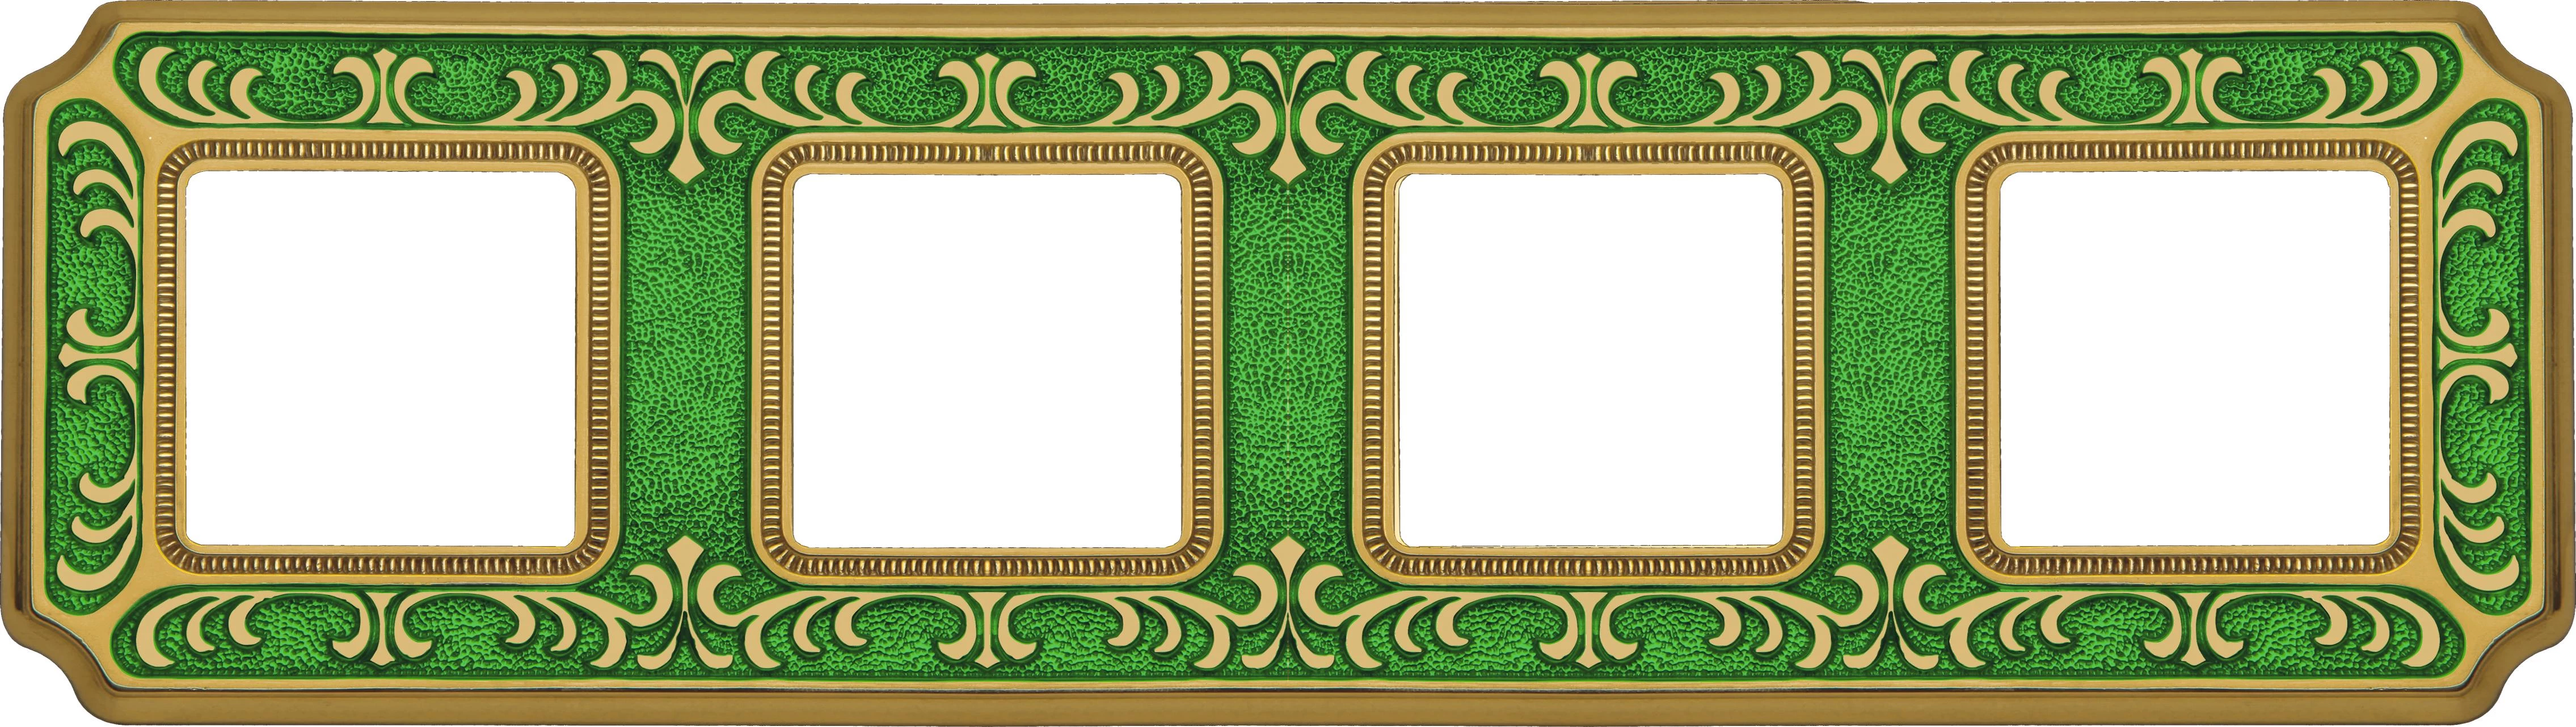  артикул FD01354VEEN название Рамка 4-ая (четверная), цвет Изумрудно-зеленый, Siena, Fede